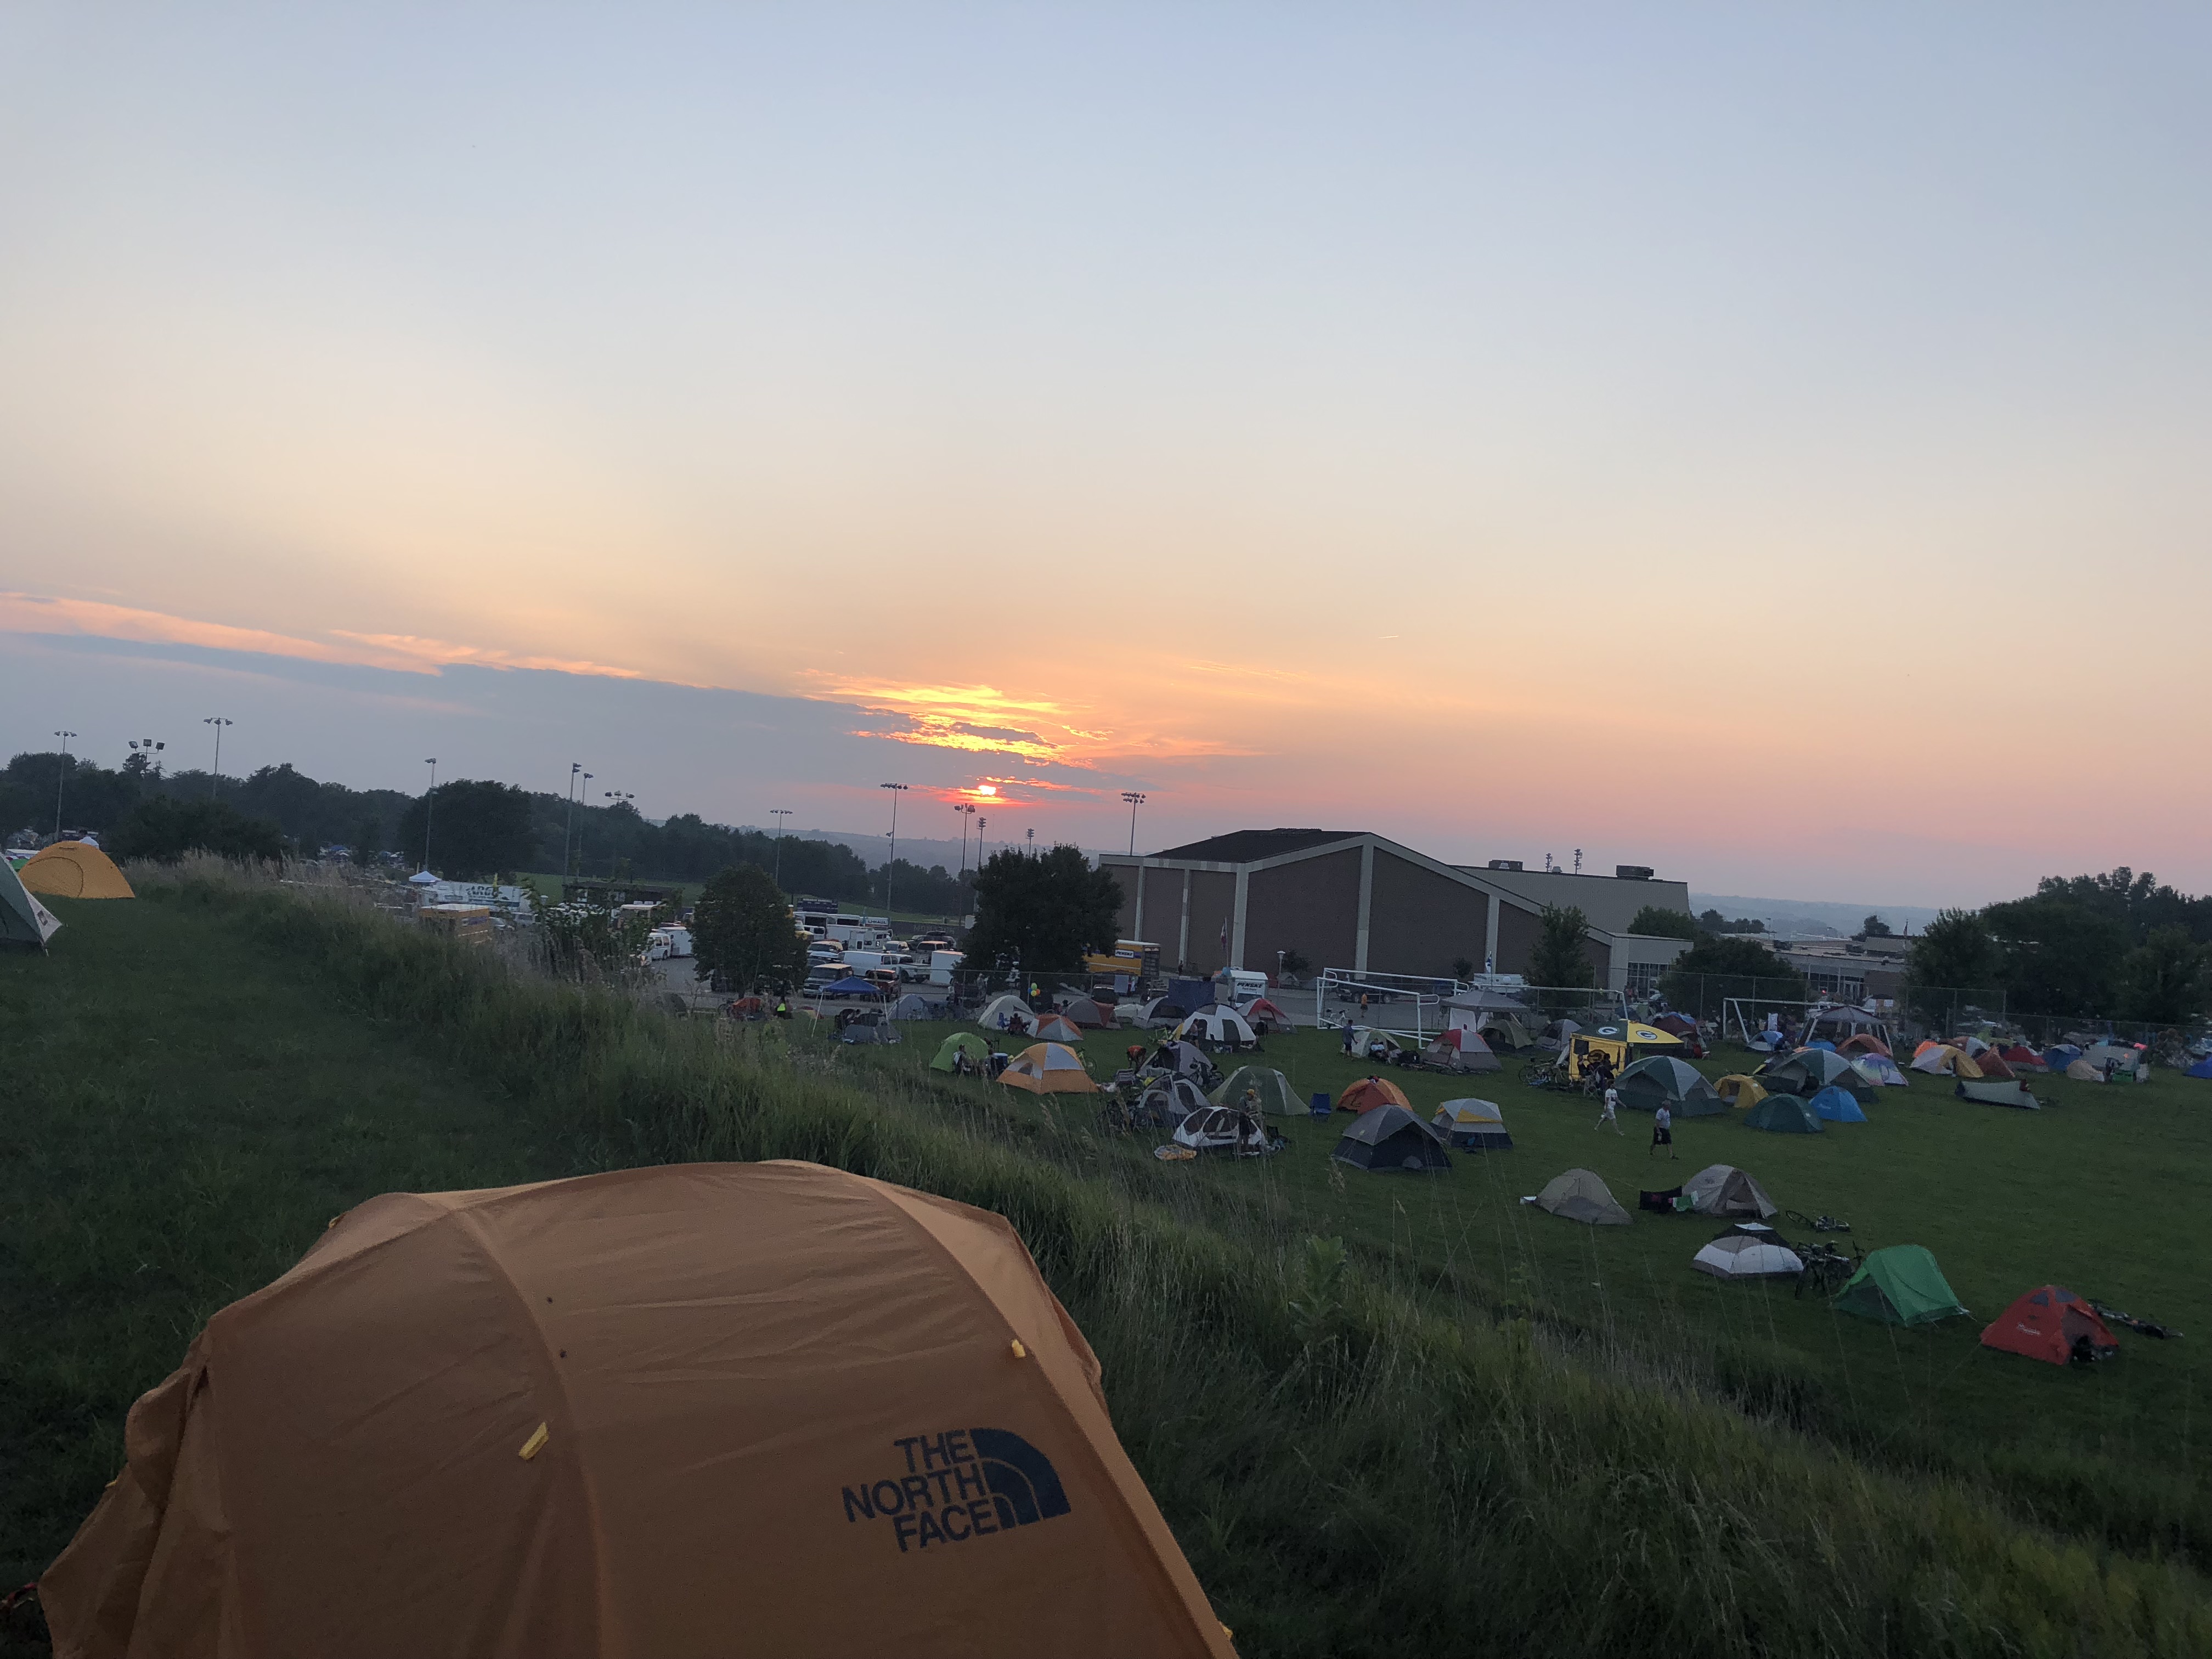 Tents are strewn across a school field in western Iowa under a sunset.